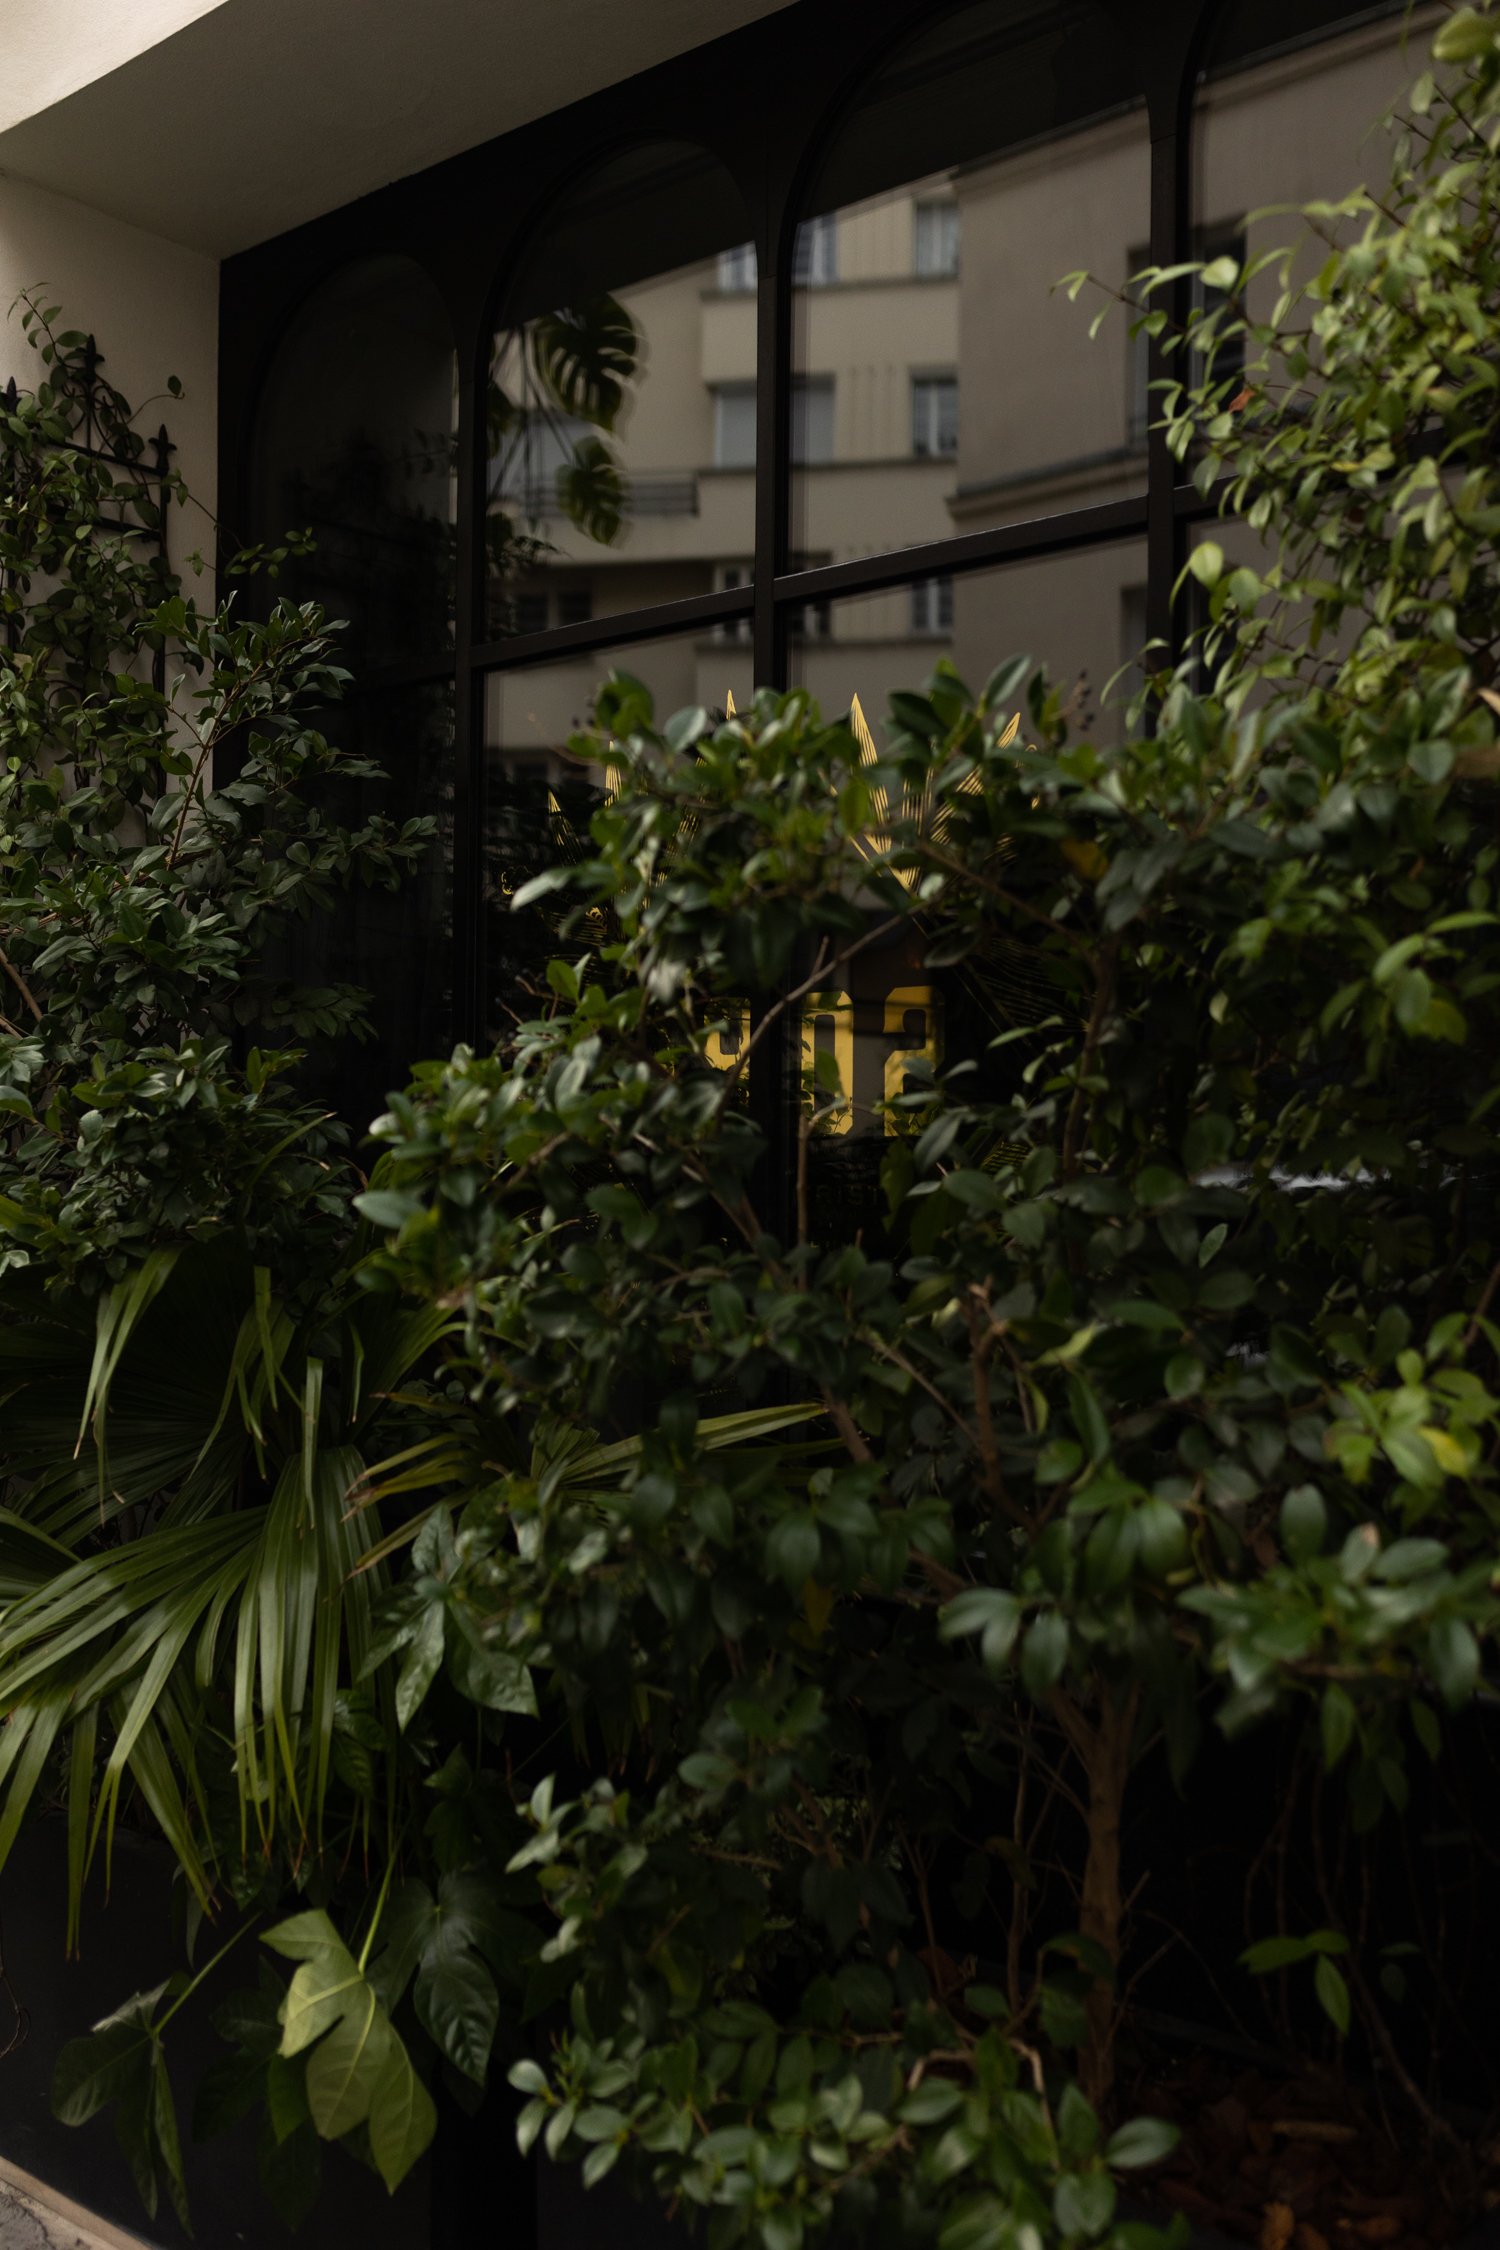 Hotel Monte Cristo in Paris, an homage to Alexandre Dumas-005.jpg